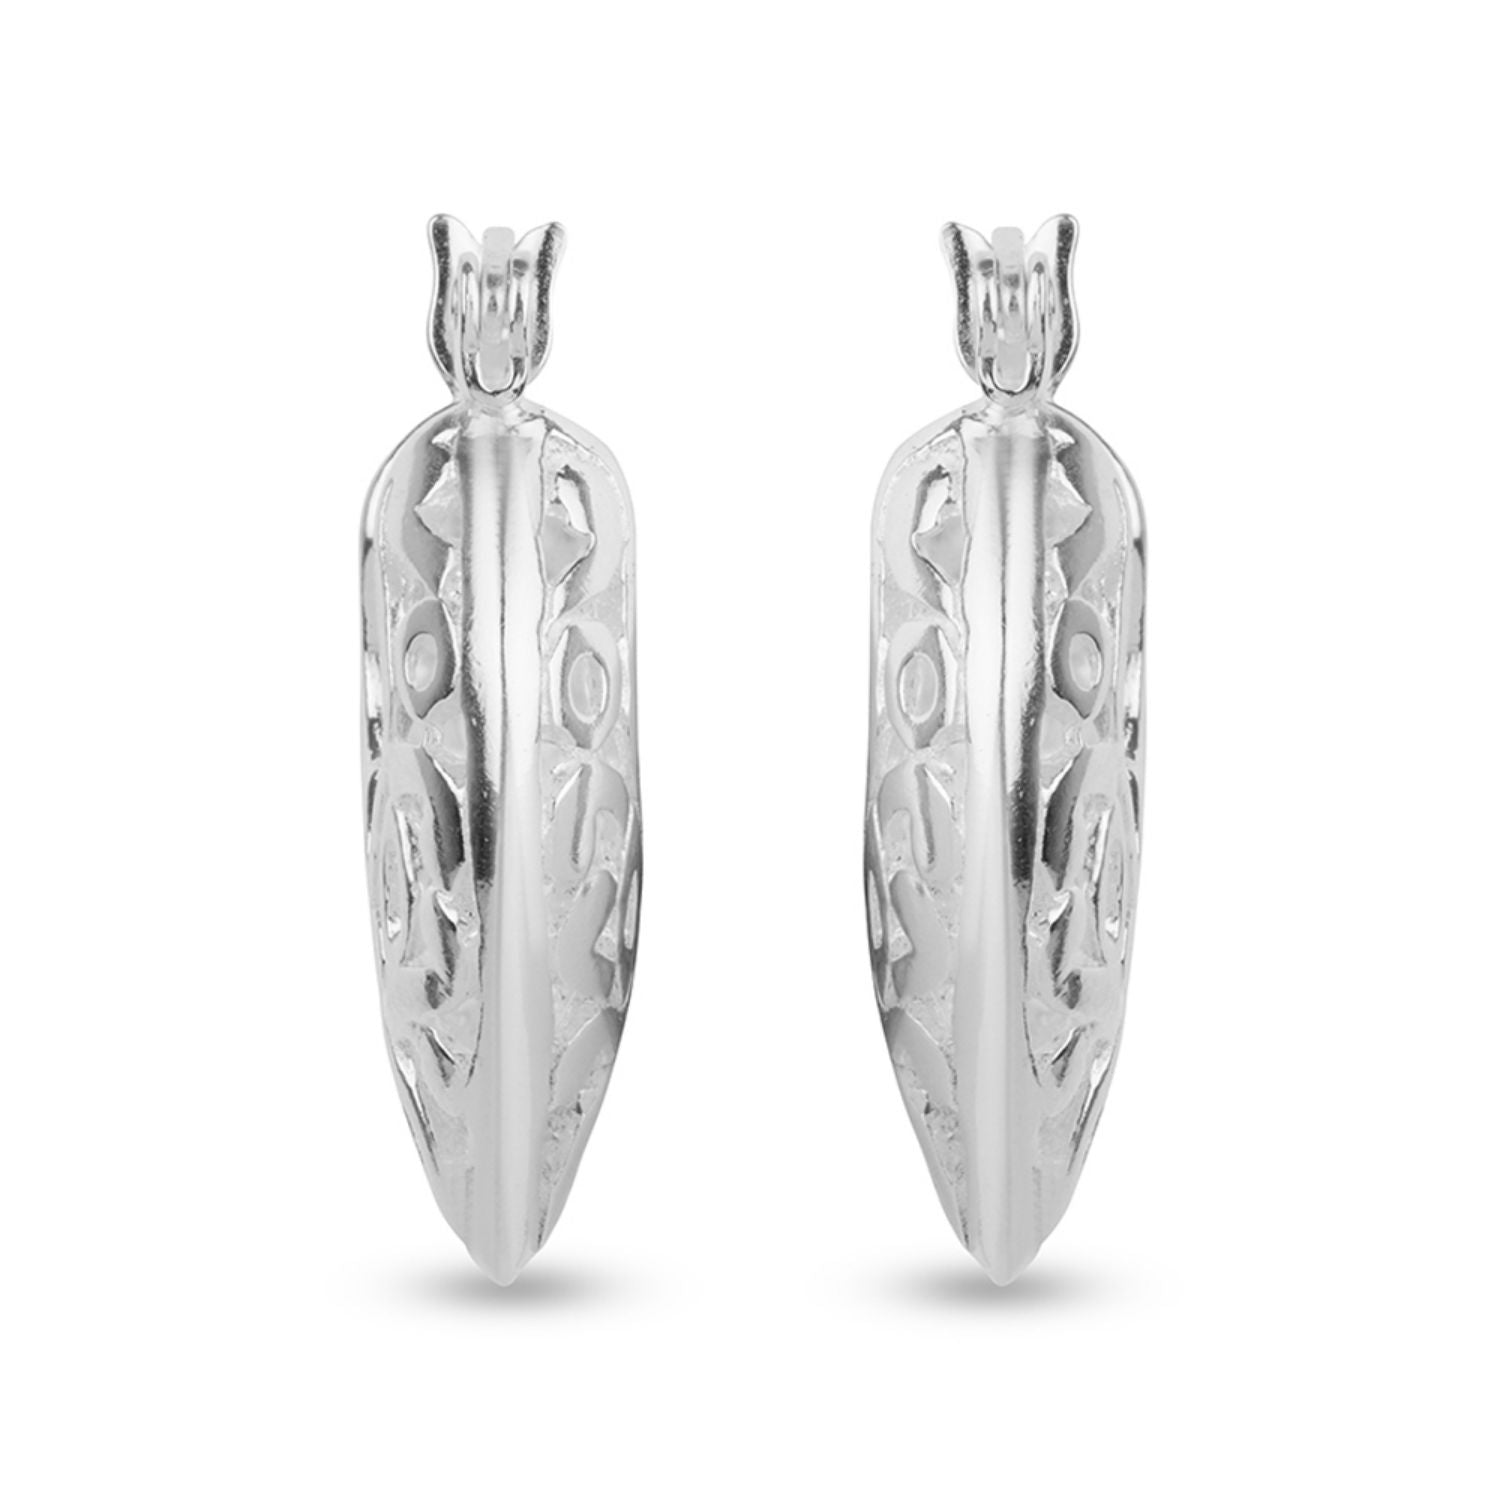 925 Sterling Silver Filigree Hoop Earrings for Teen Women